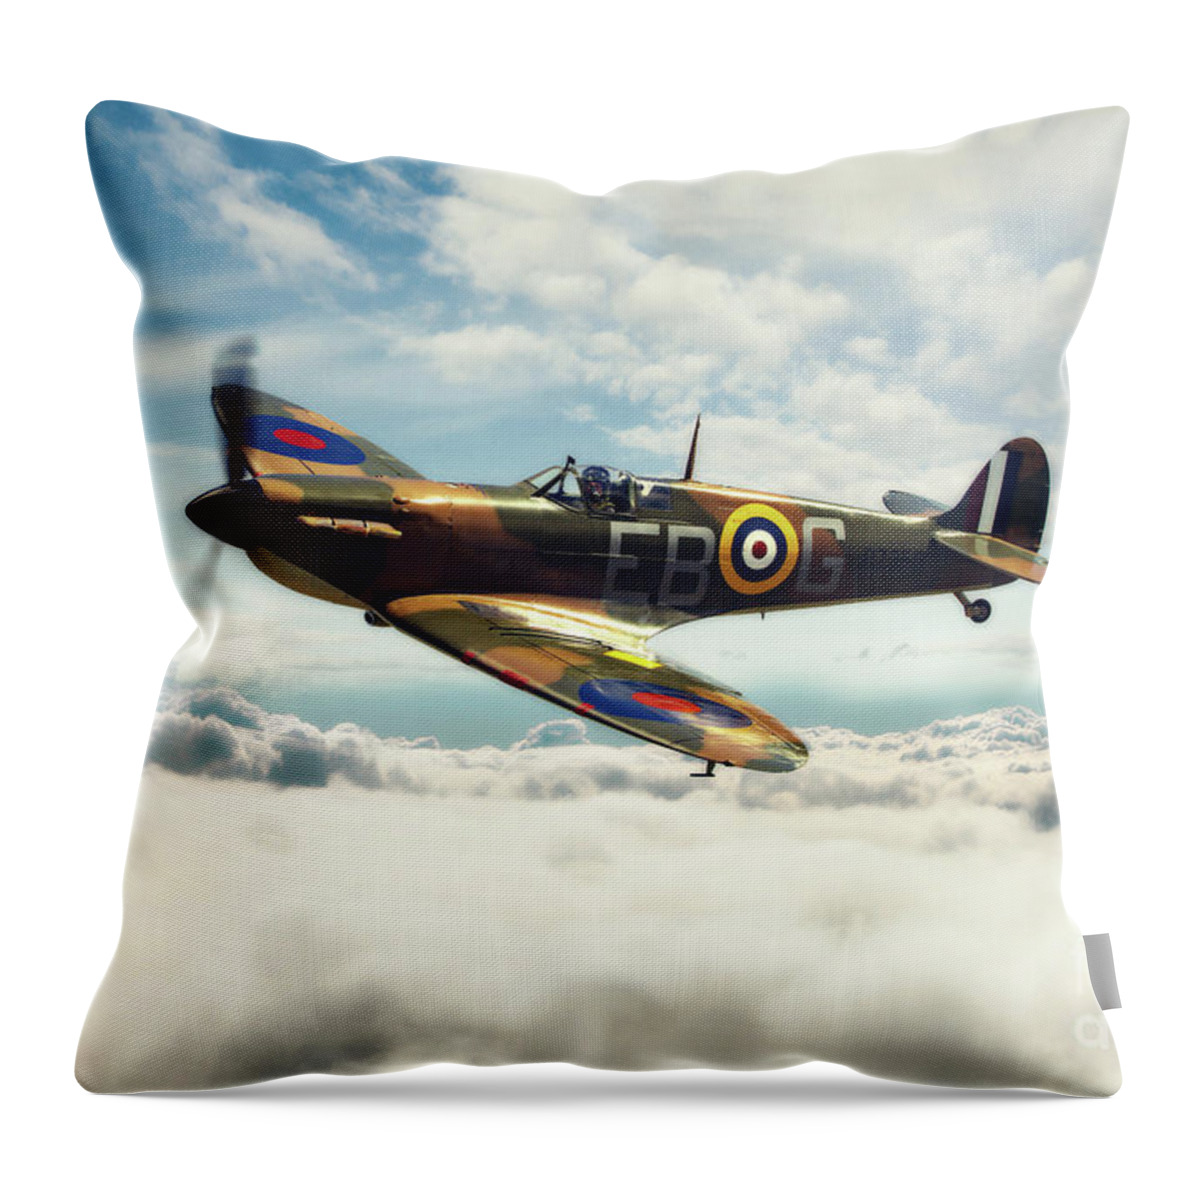 Supermarine Spitfire P7350 Throw Pillow featuring the digital art Spitfire P7350 by Airpower Art